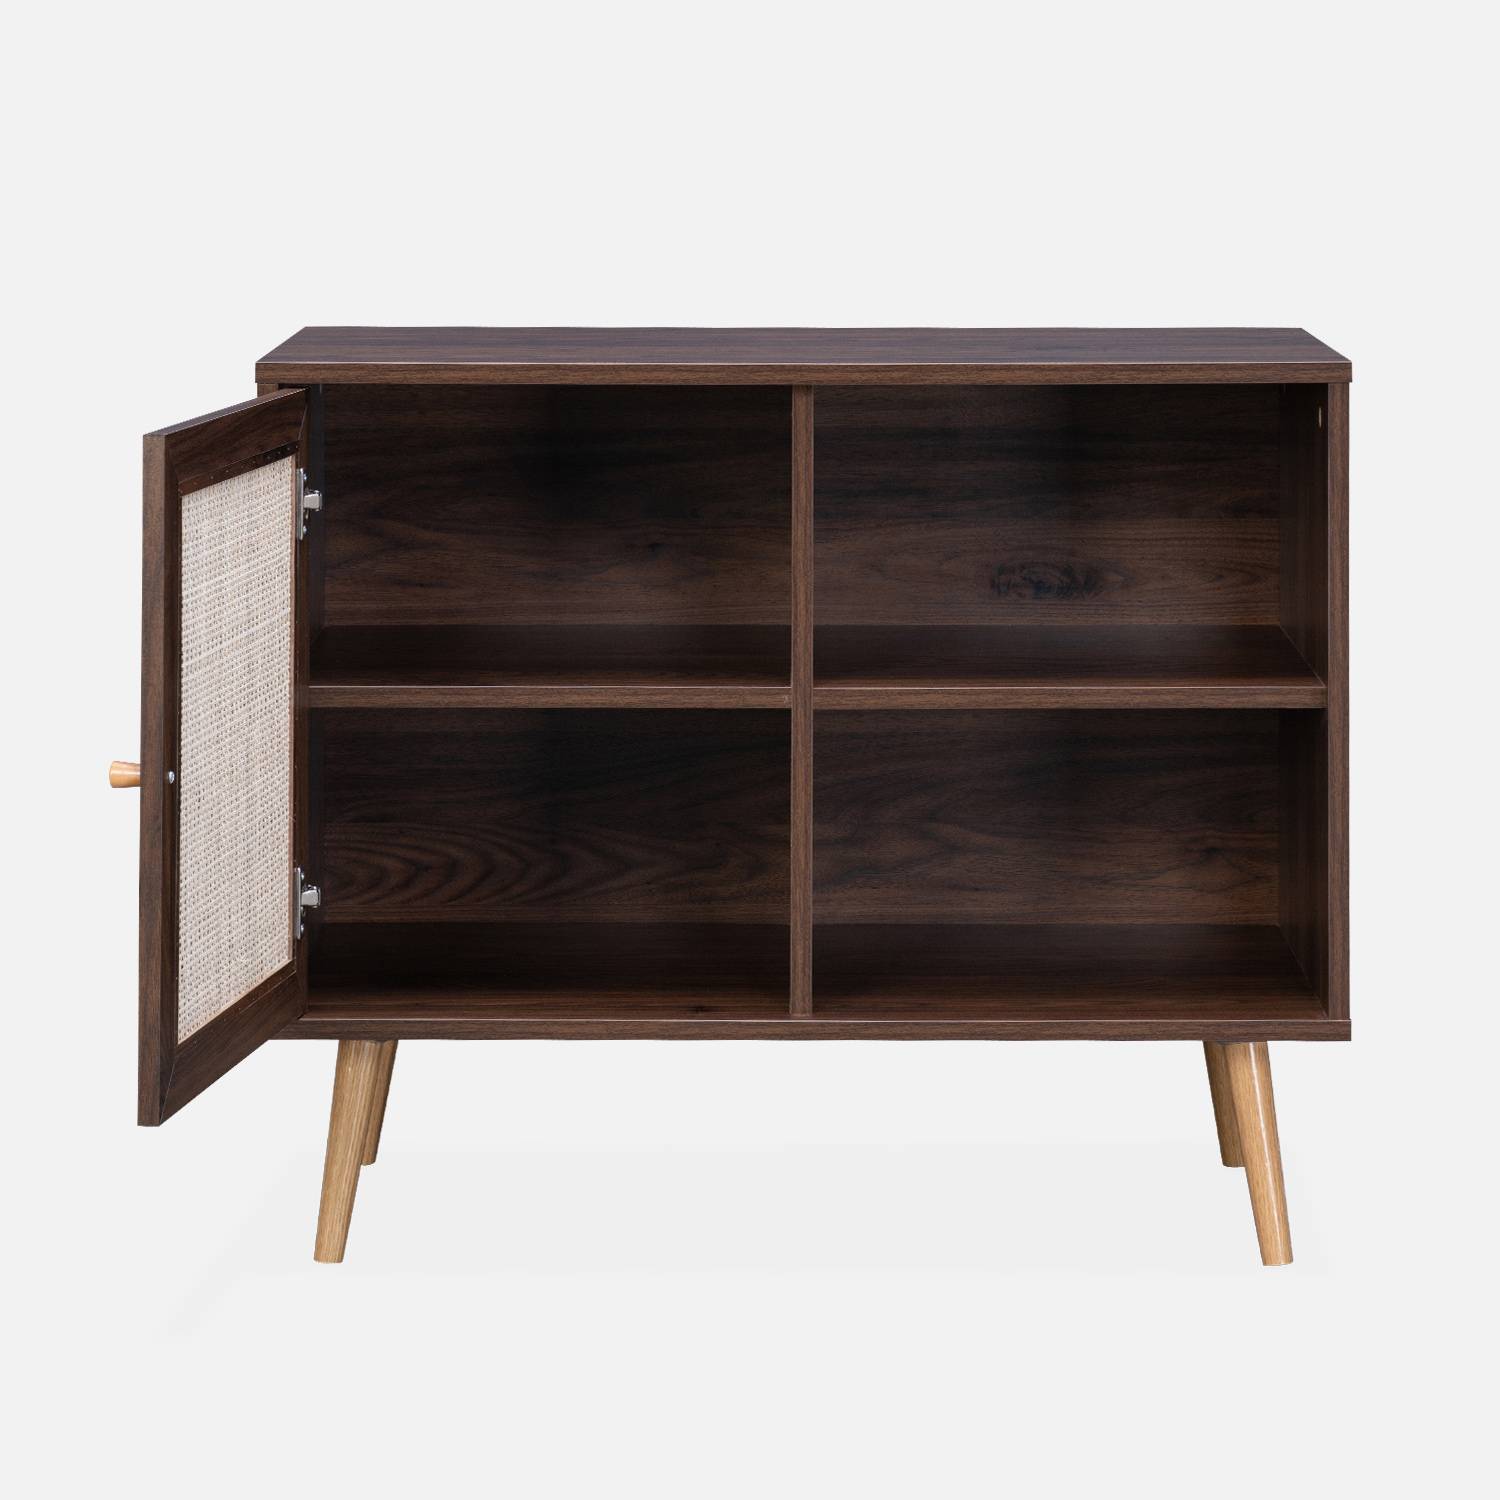 Wooden and cane rattan detail storage cabinet with 2 shelves, 1 cupboard, Scandi-style legs, 80x39x65.8cm - Boheme - Dark wood colour,sweeek,Photo4